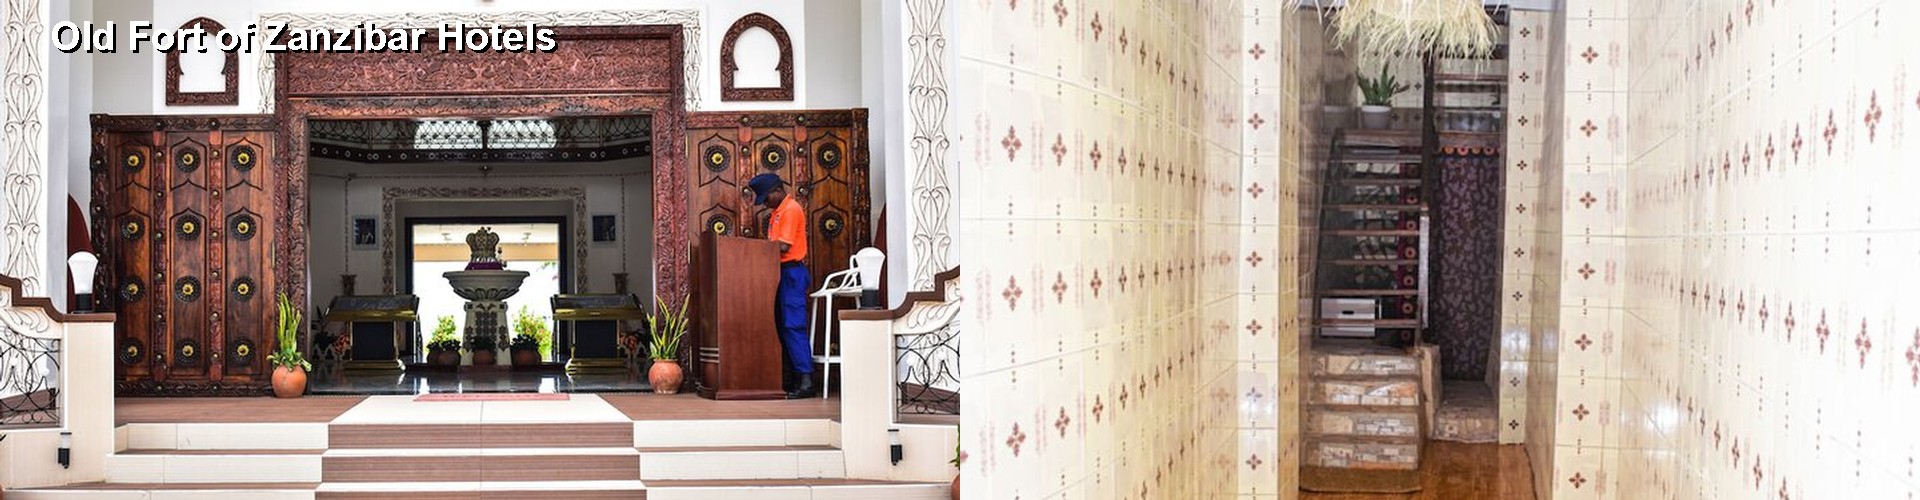 5 Best Hotels near Old Fort of Zanzibar